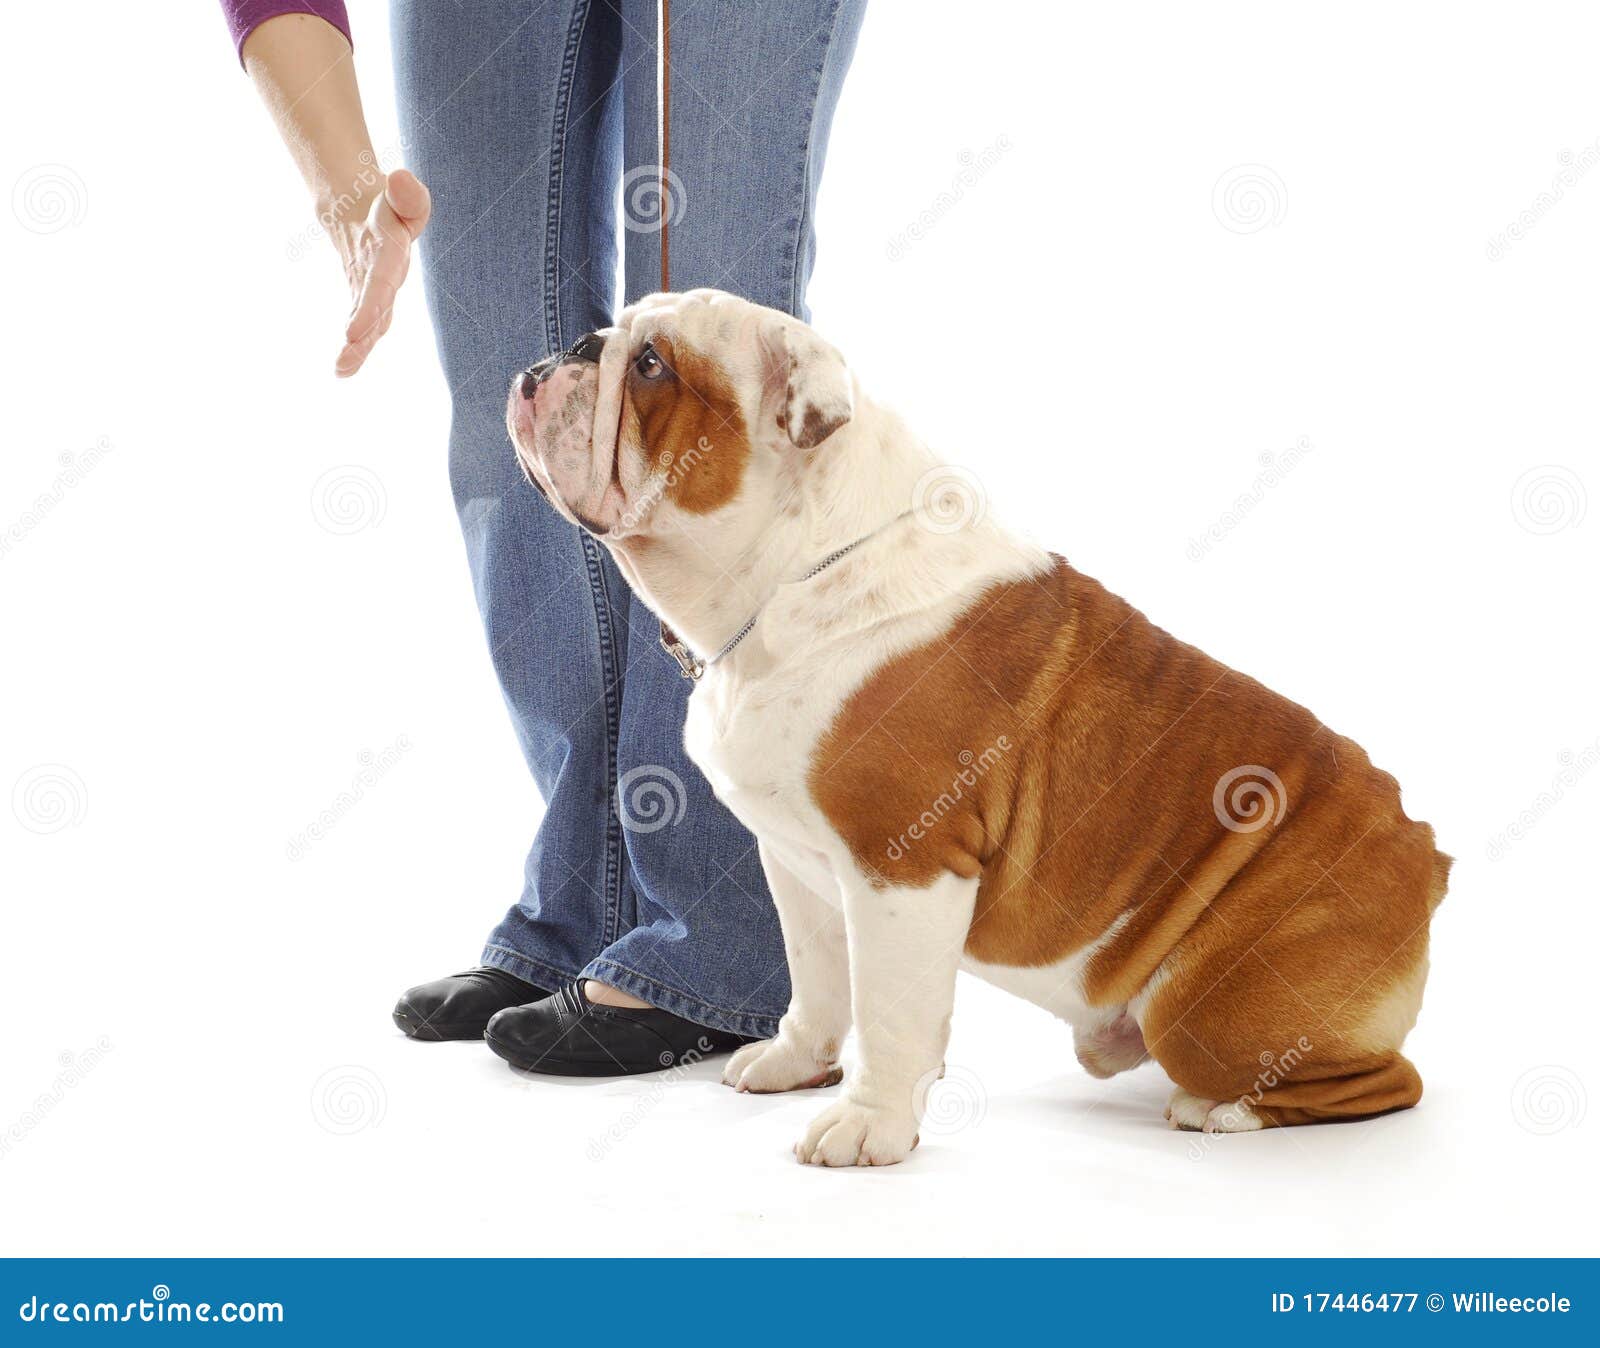 obedience training dog